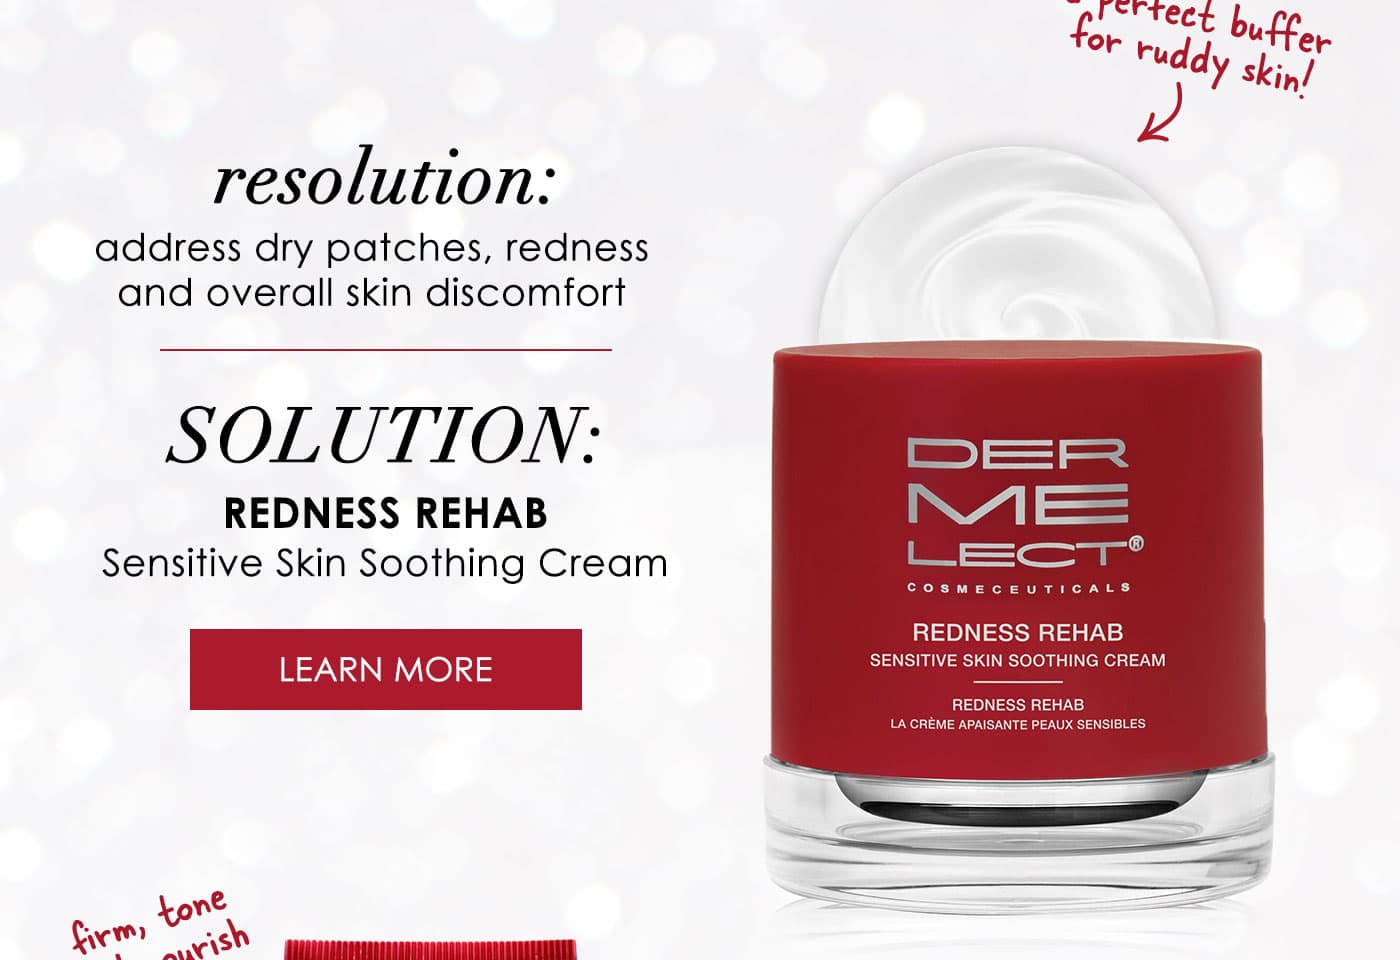 REDNESS REHAB Sensitive Skin Soothing Cream